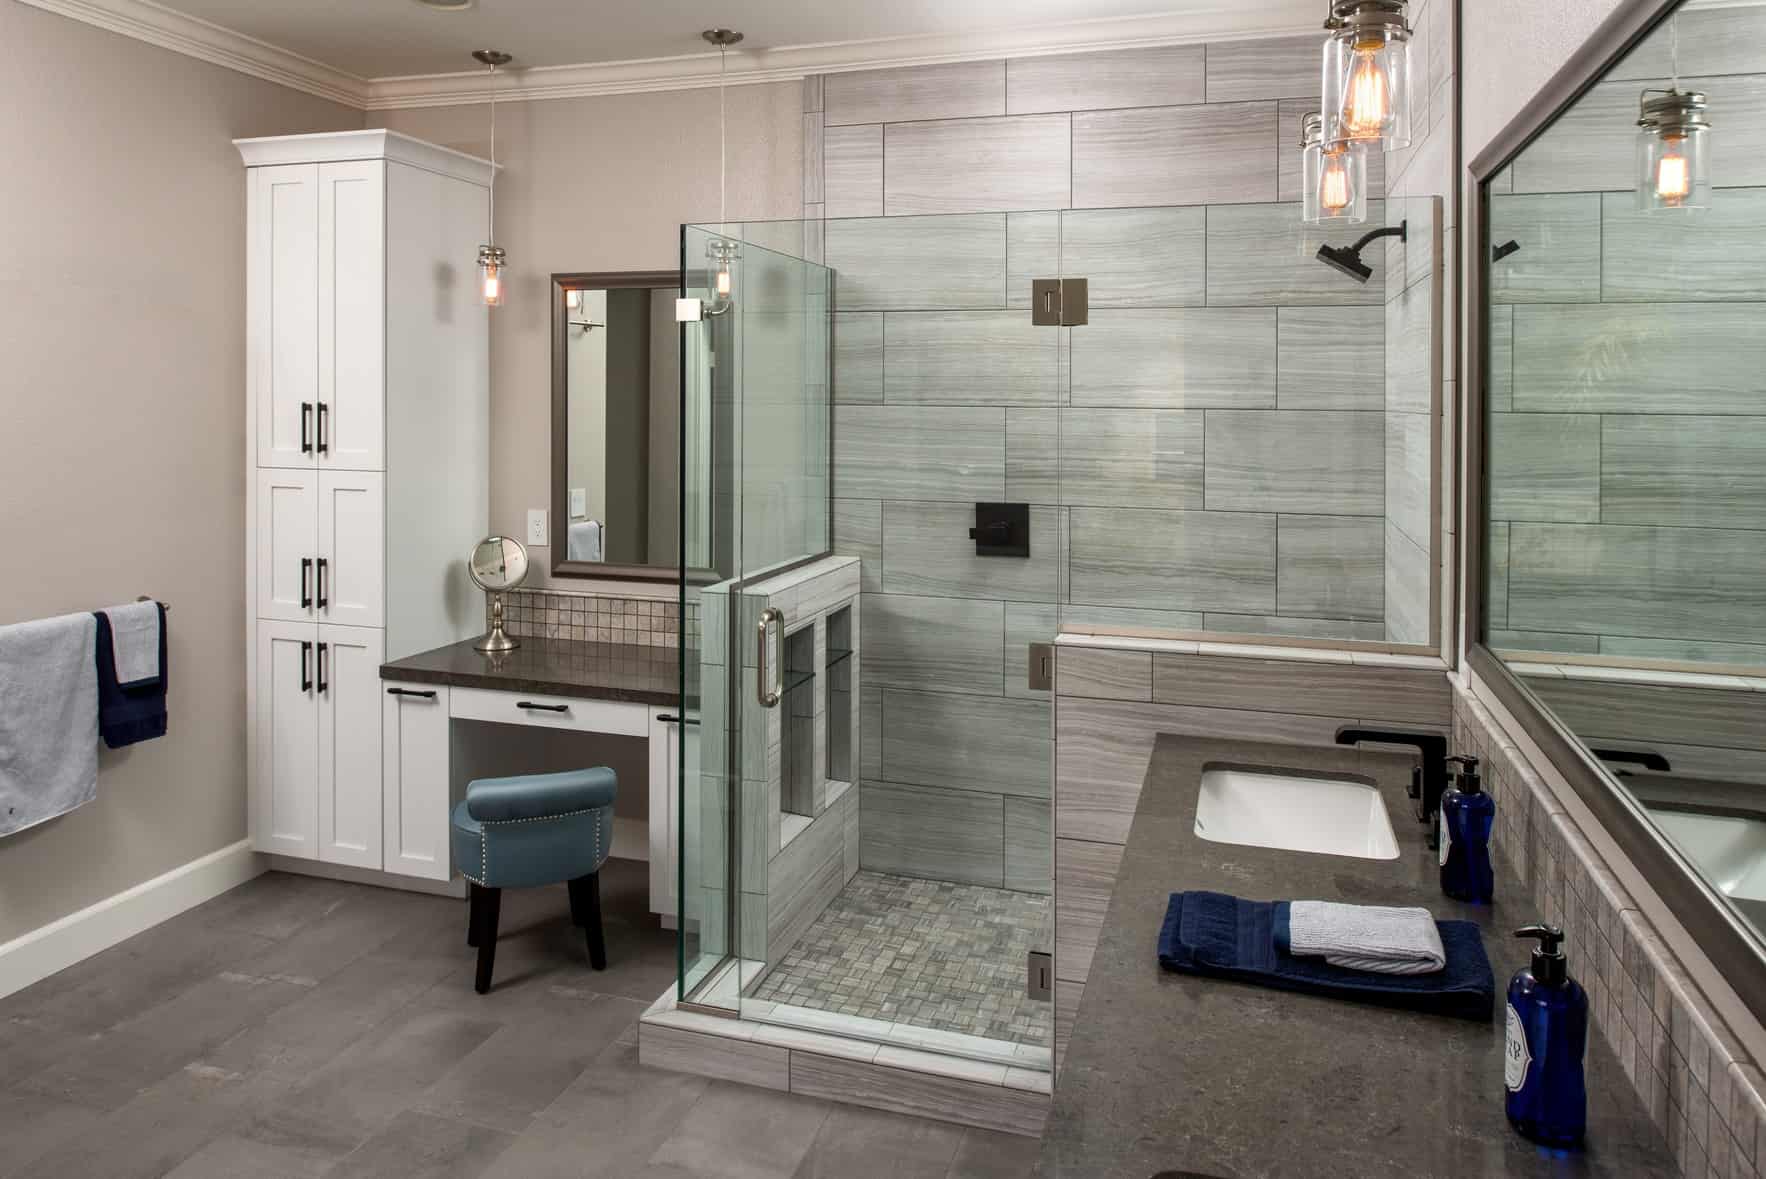 Bathroom Remodel Pics Simple Home Designs